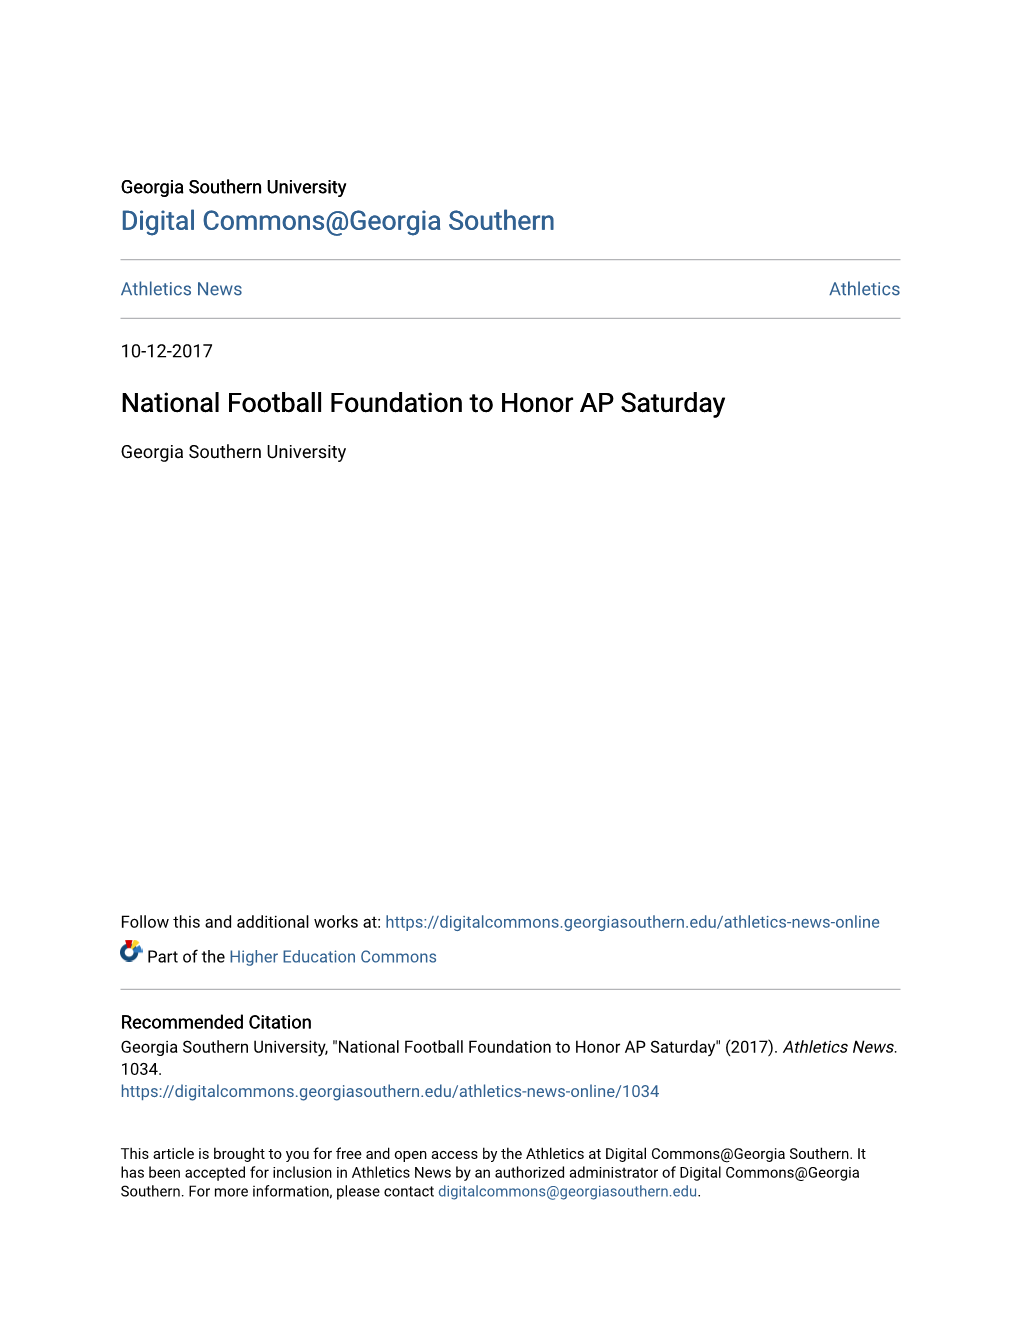 National Football Foundation to Honor AP Saturday